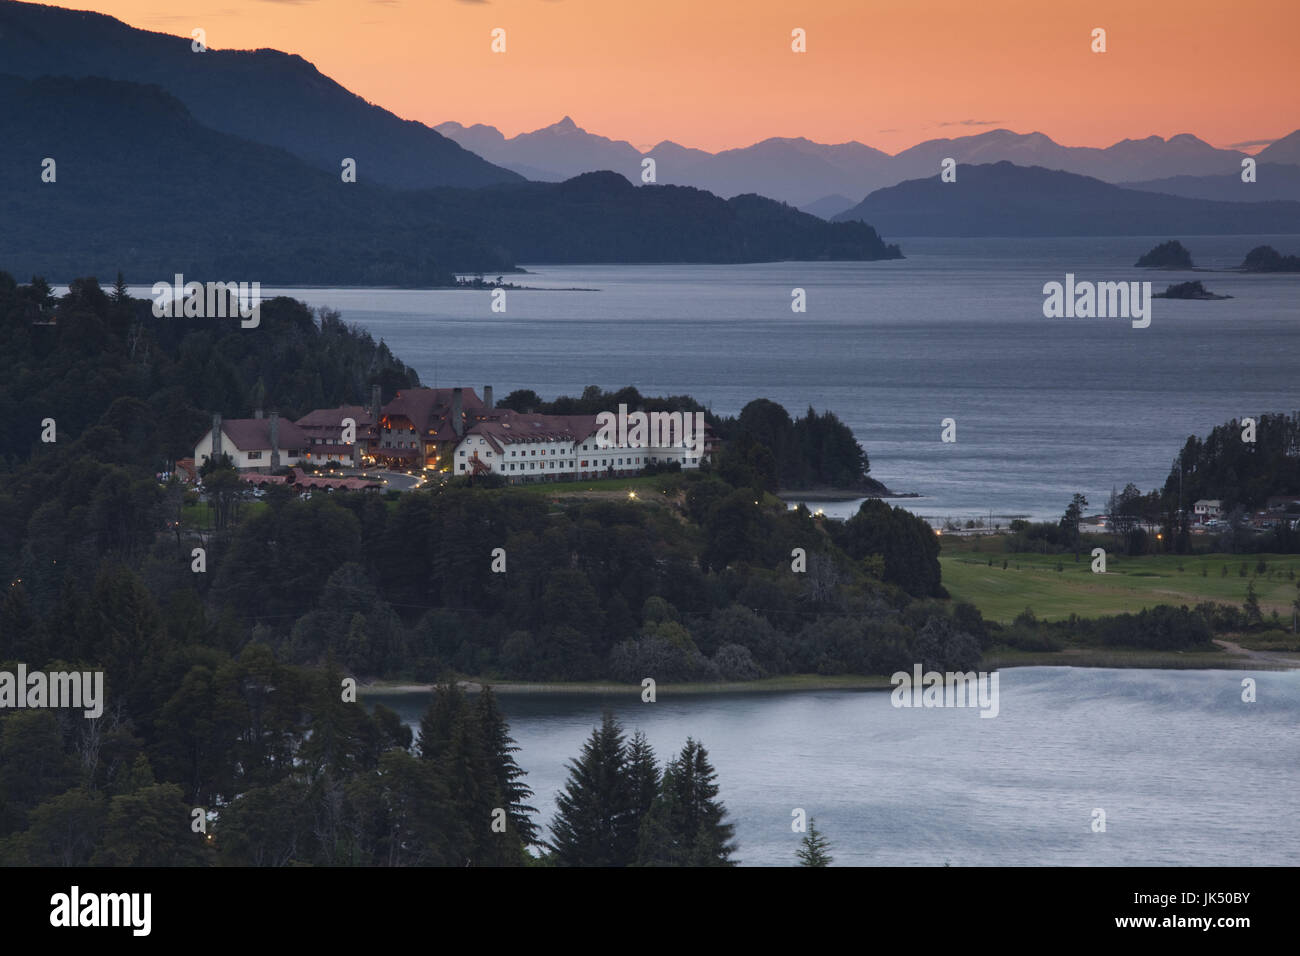 Argentina, Rio Negro Province, Lake District, Llao Llao, Hotel Llao Llao and Lake Nahuel Huapi, dusk Stock Photo